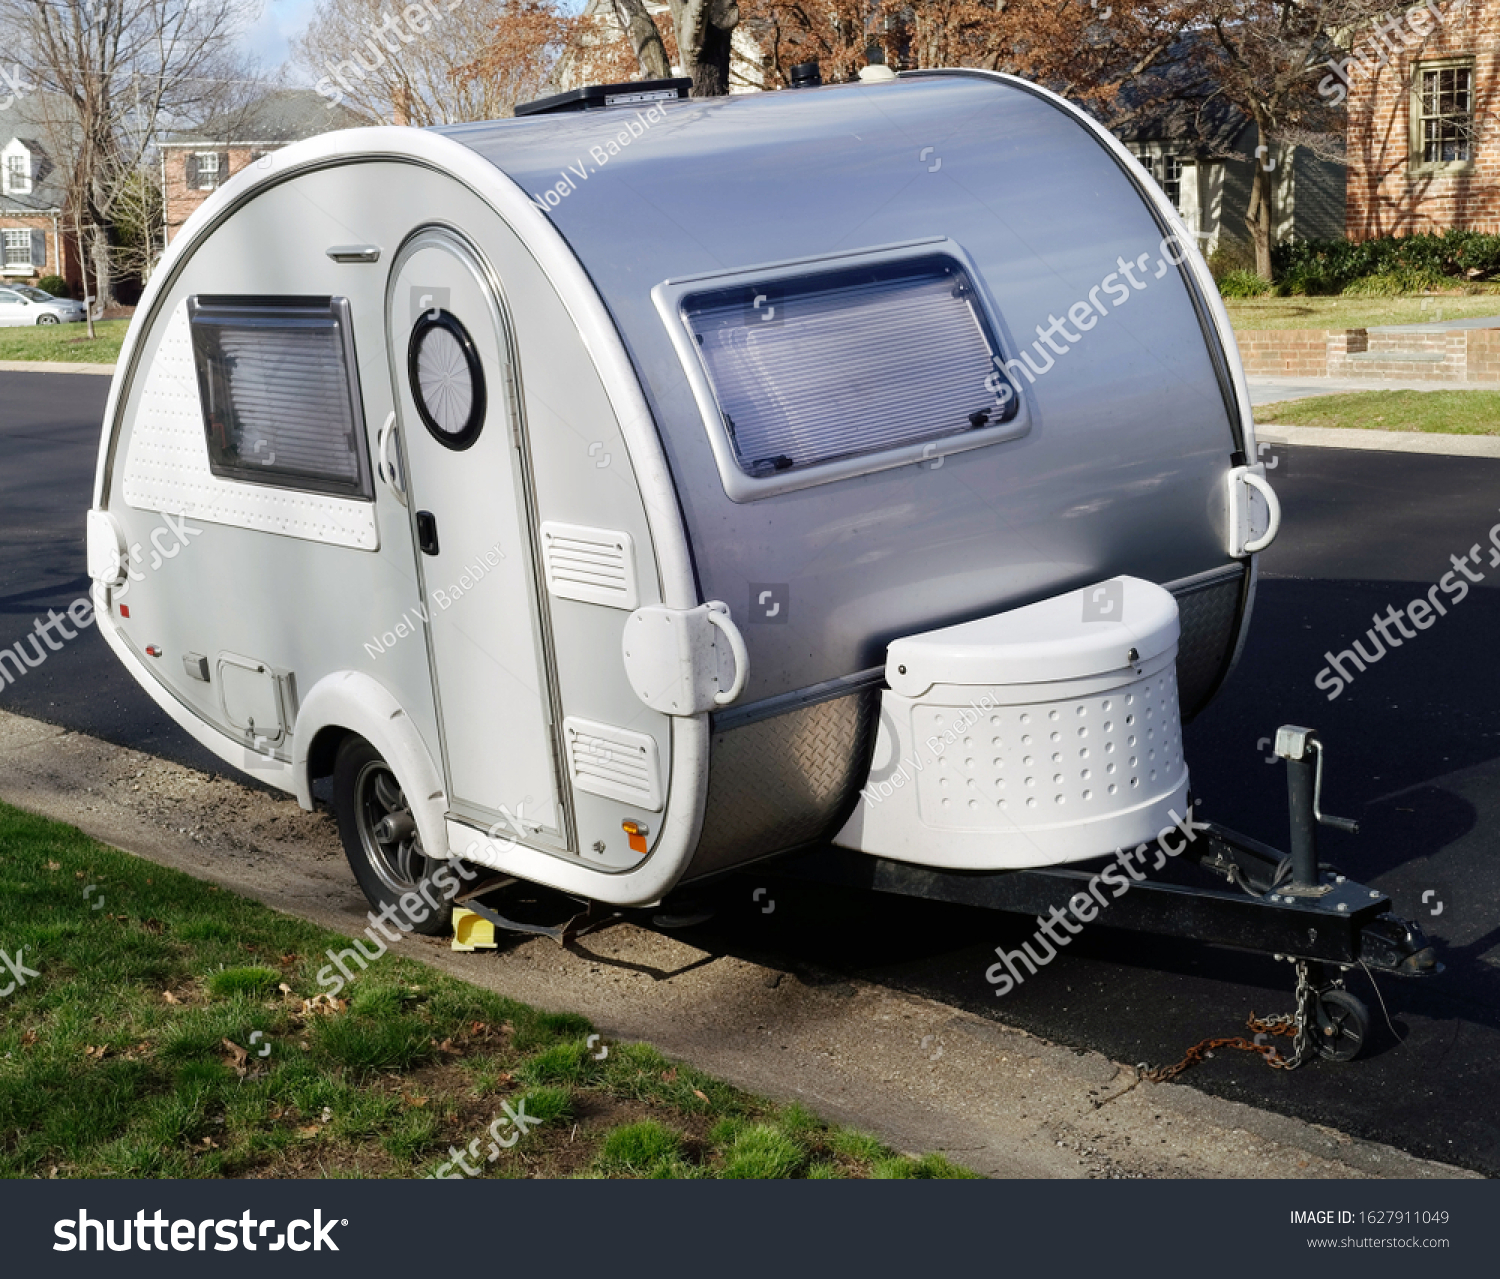 Cute teardrop shaped camping trailer parked in residential neighborhood. #1627911049